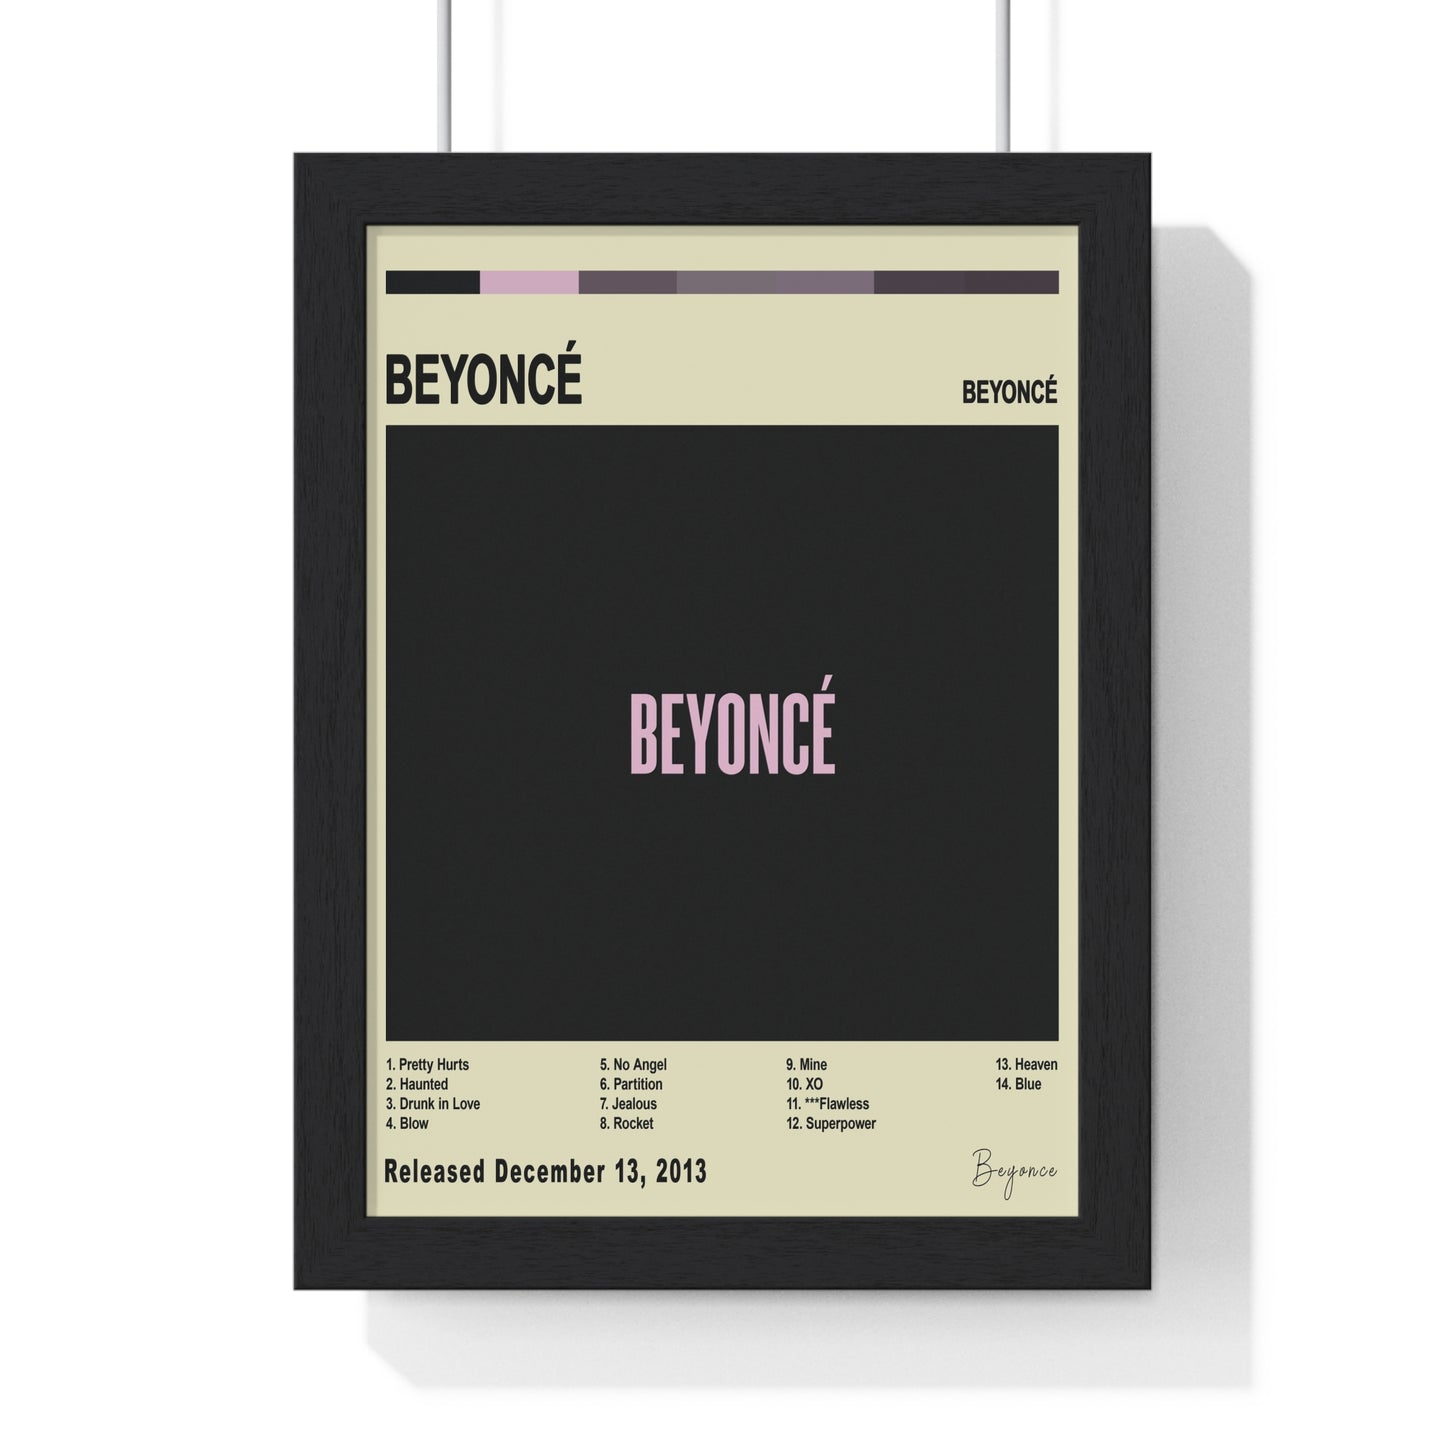 BEYONCÉ - BEYONCÉ Album Poster